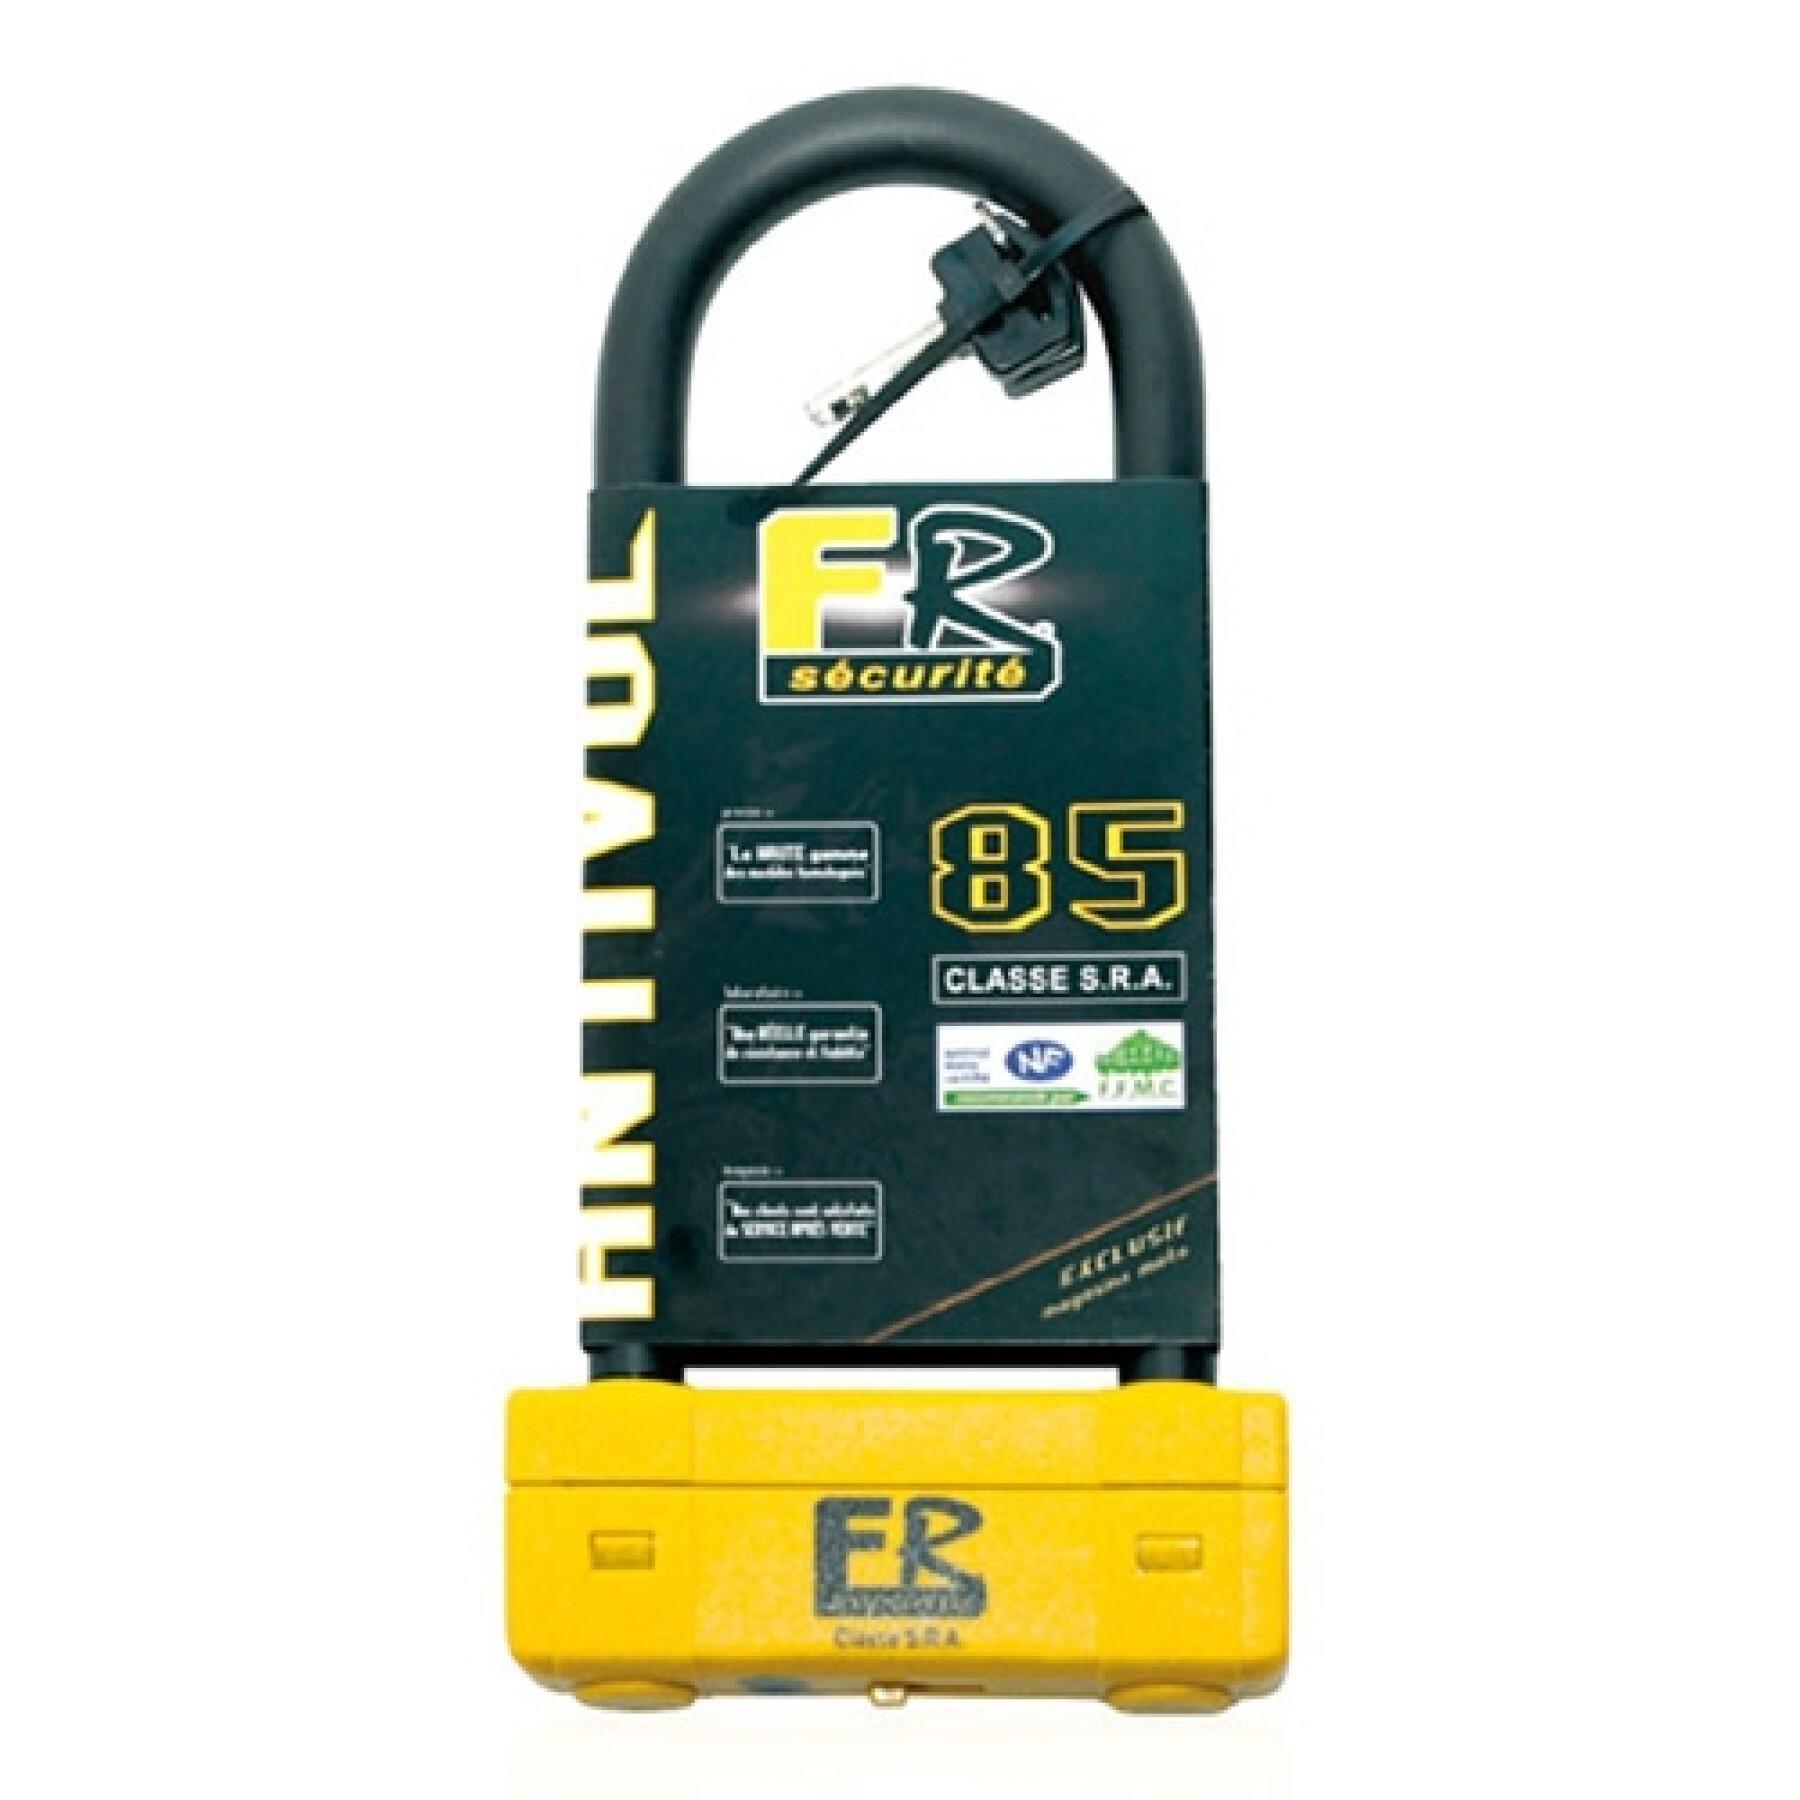 16 mm sra approved u-lock - nf-ffmc FR Securite FR 85 M – 85 x 250 mm